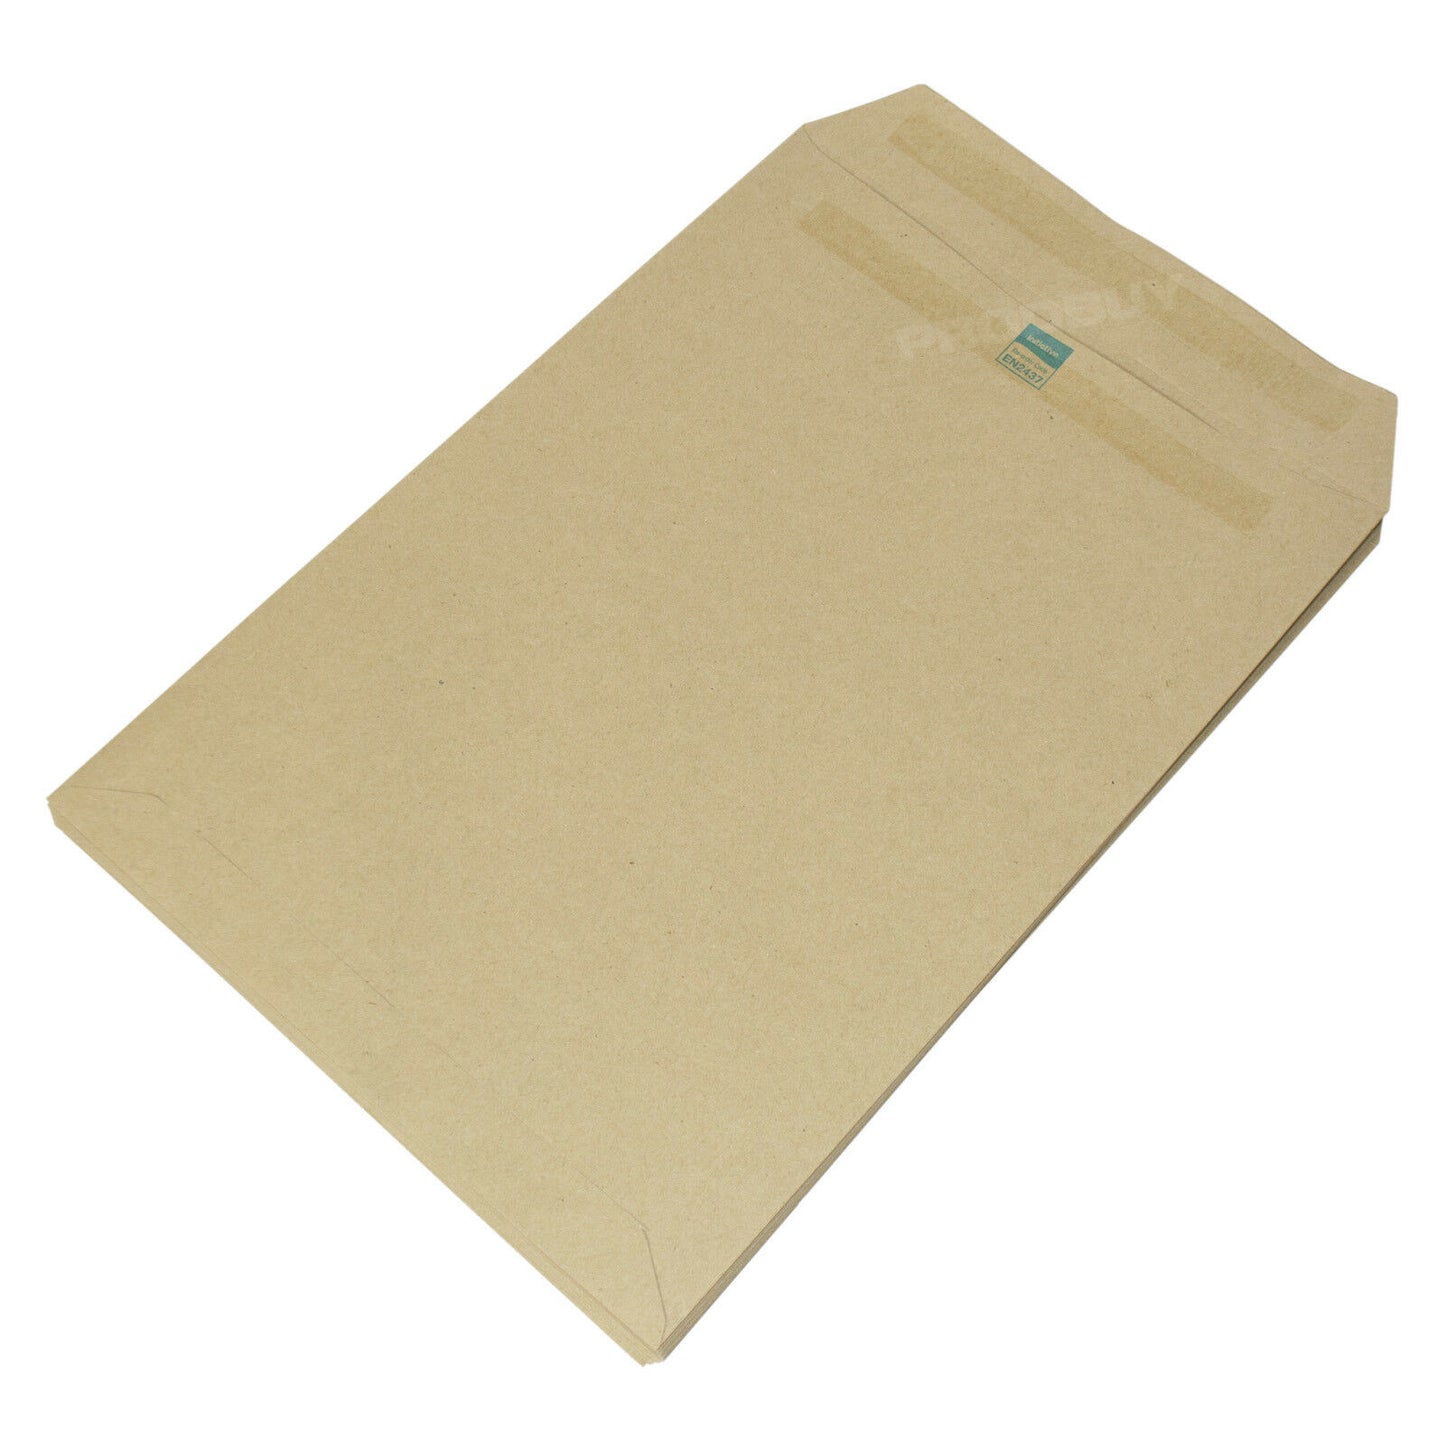 25 C4 Envelopes Manilla Lightweight Plain 80gsm Self Seal